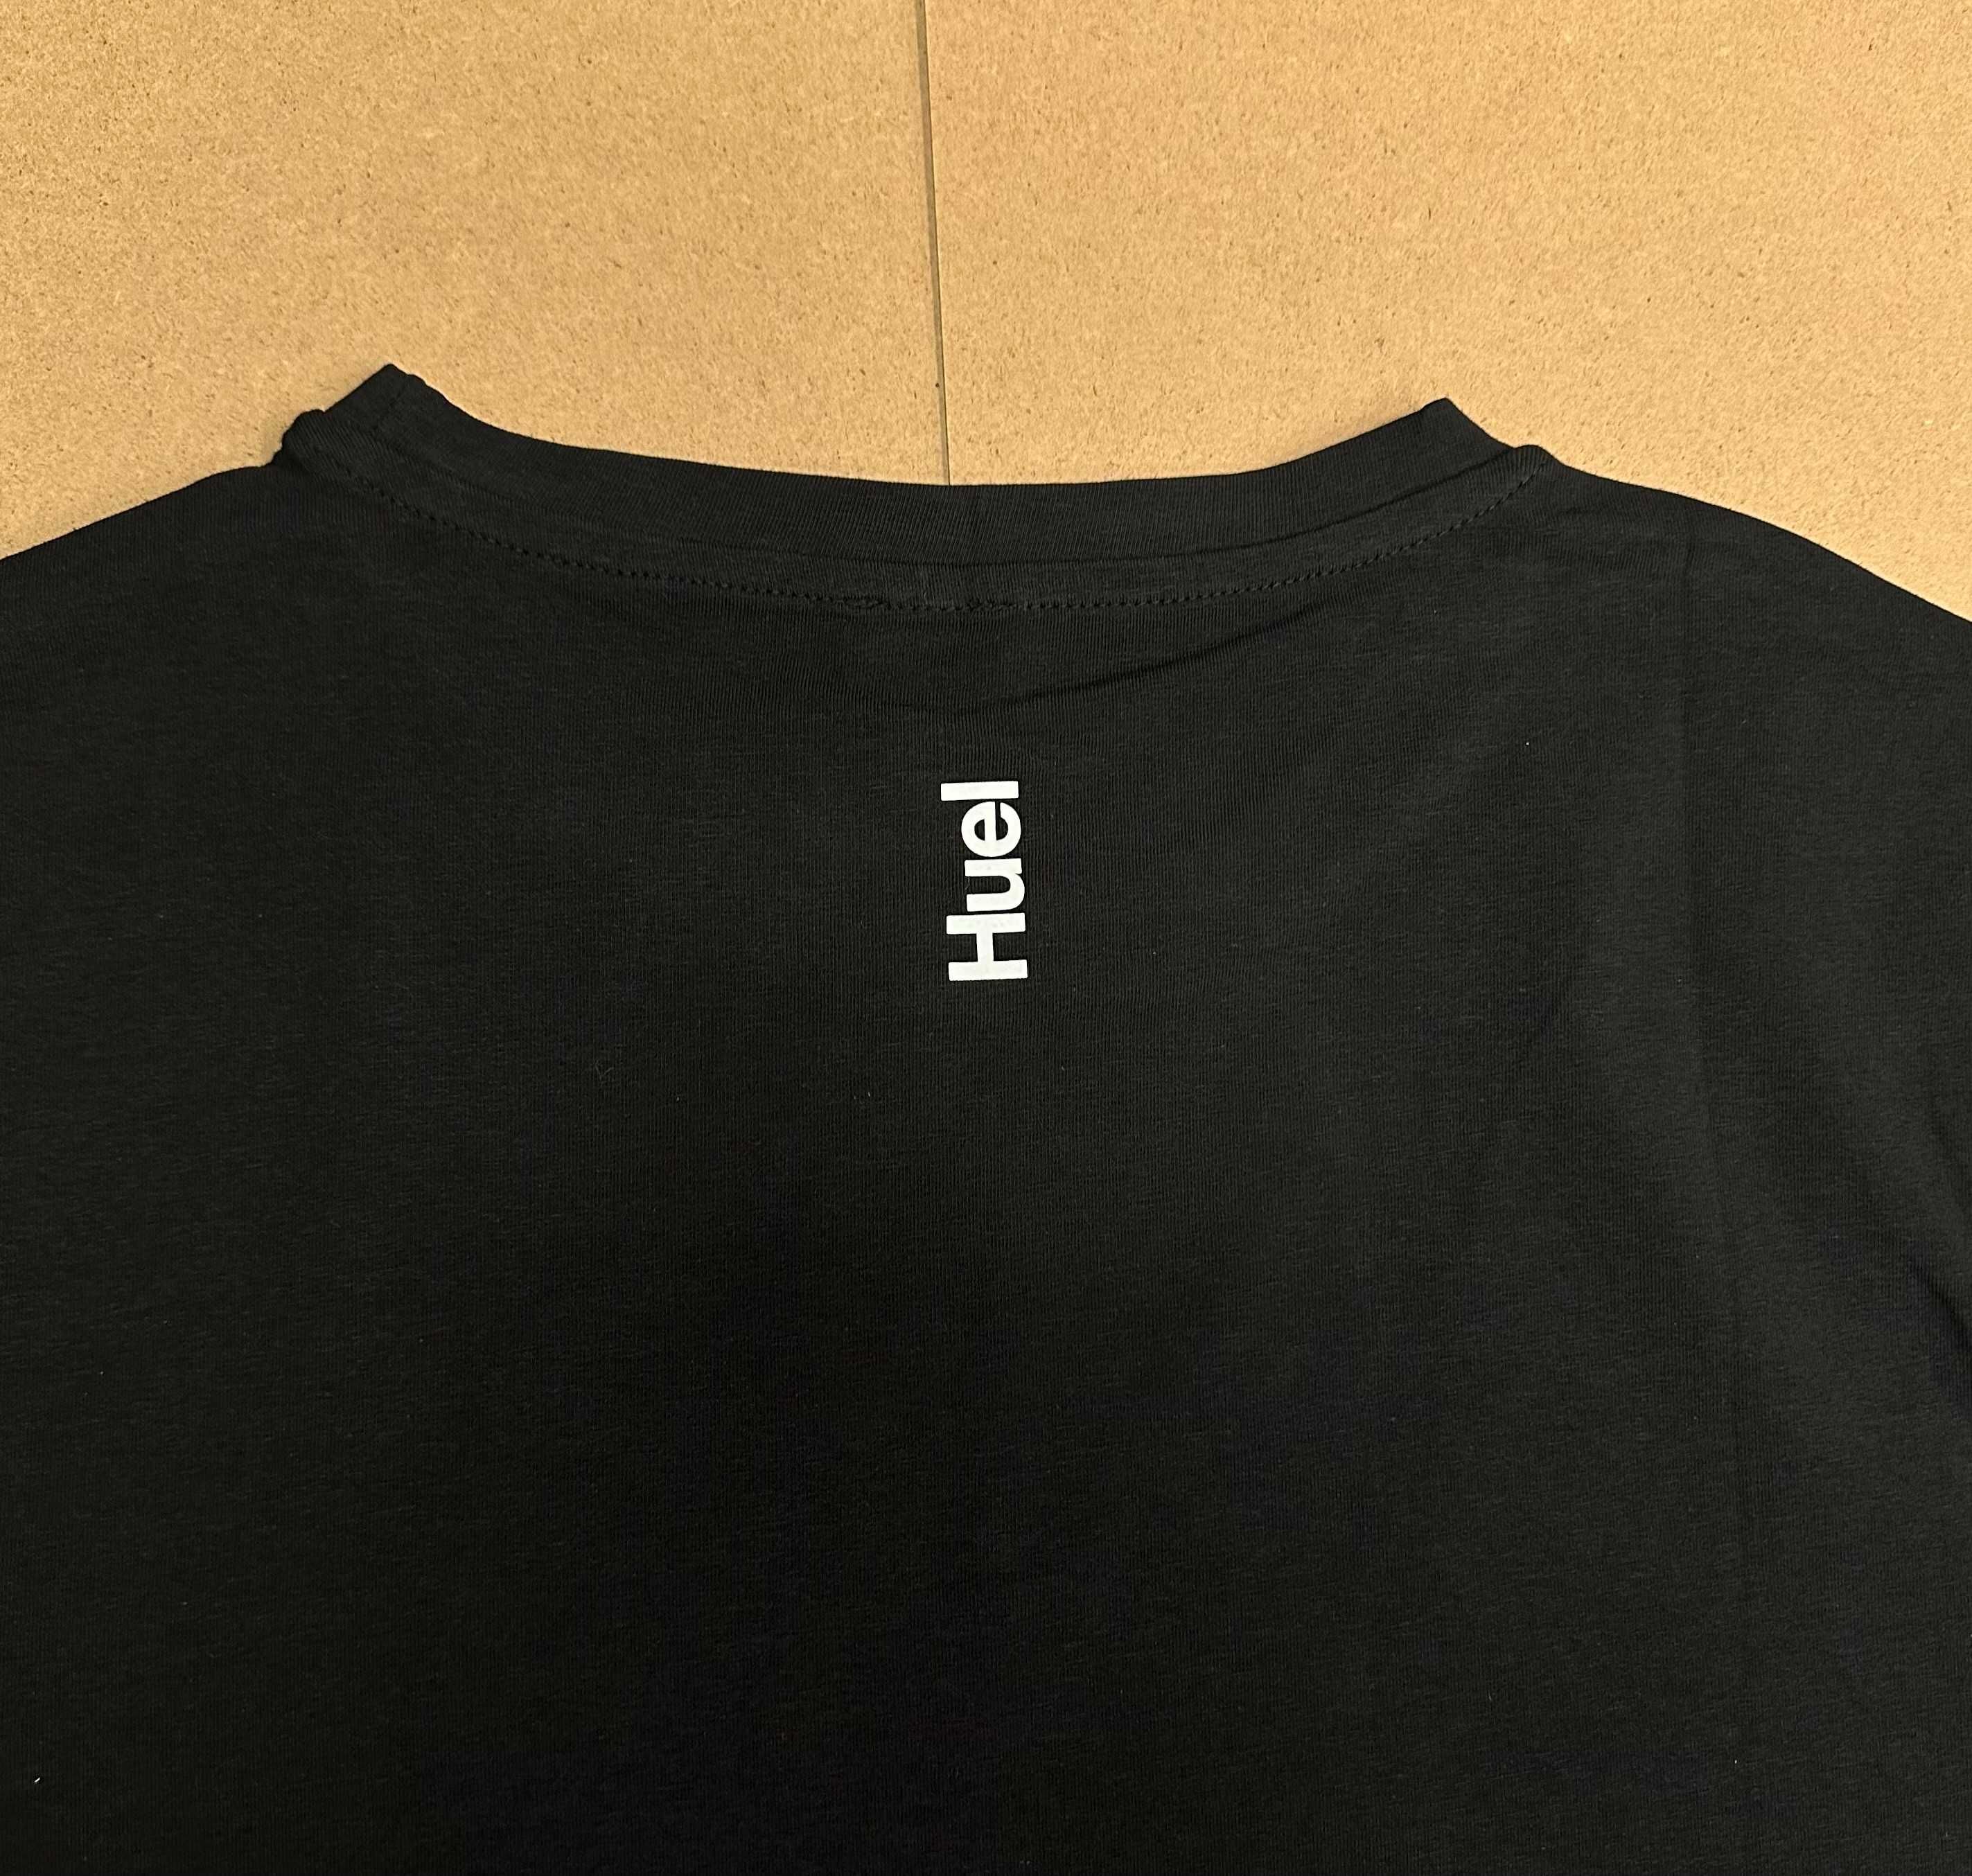 Koszulka męska T-Shirt męski Huel rozmiar S/M/L/XL/XXL czarna 2 sztuki